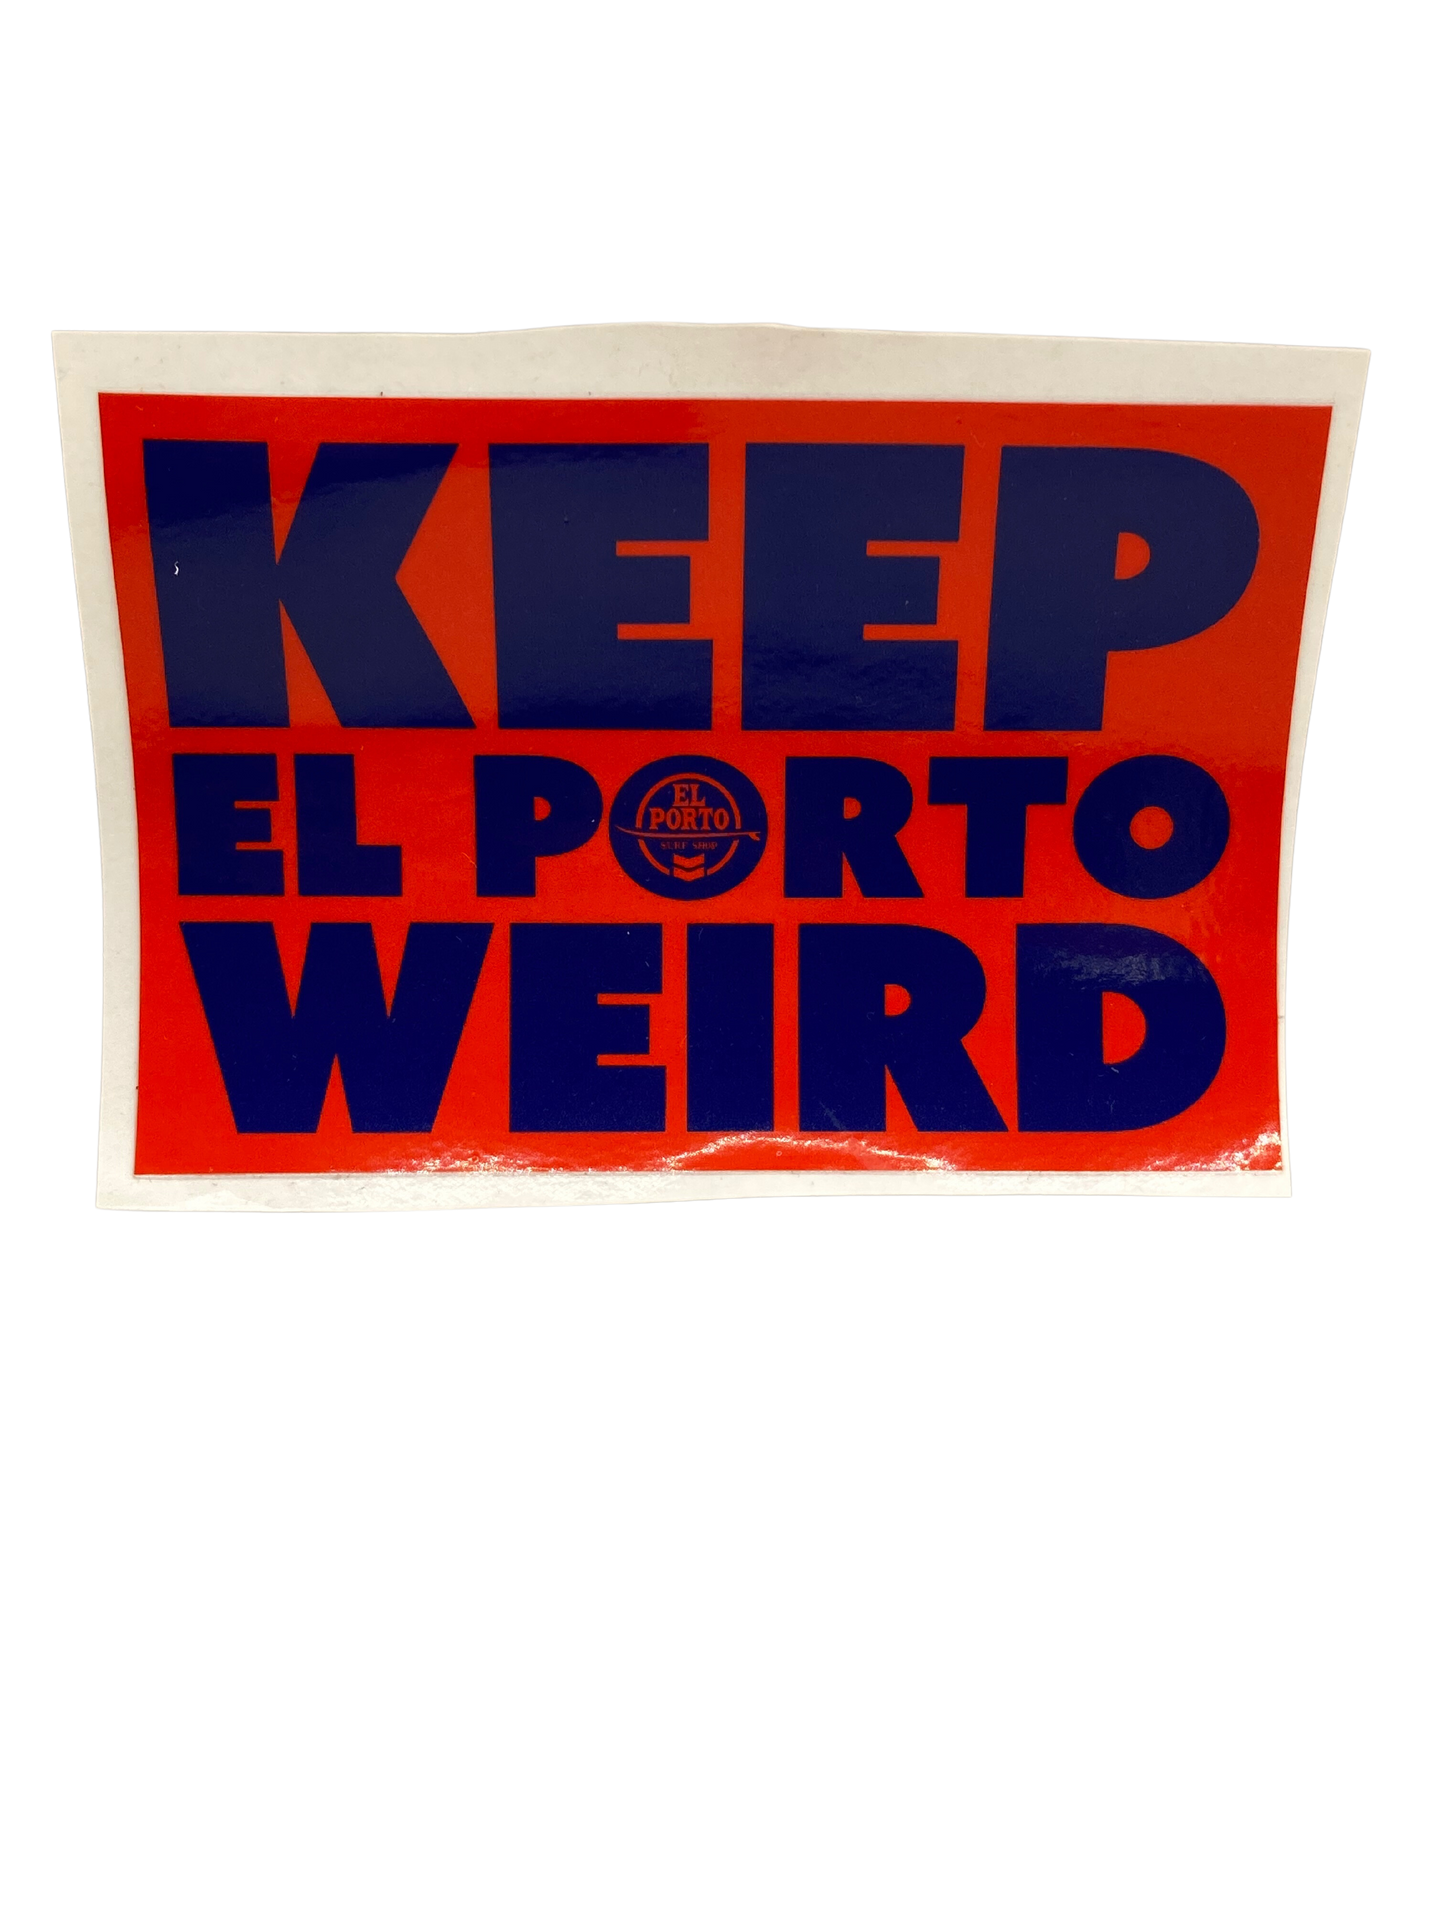 "Keep El Porto Weird" Sticker